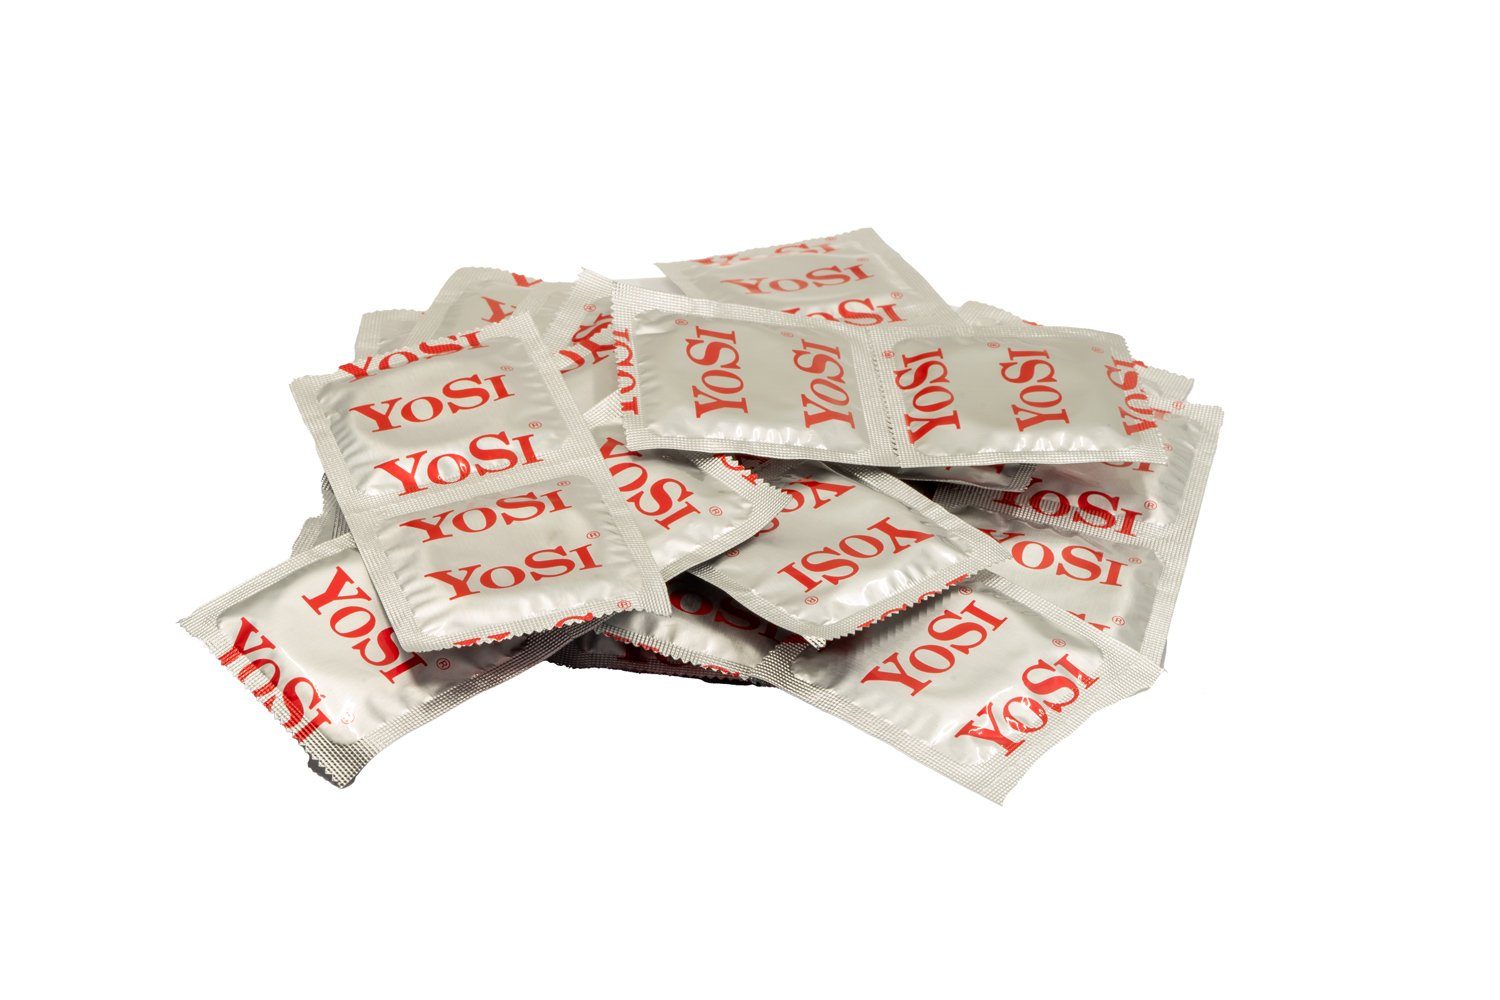 YOSI Kondome 25877R, 4er Set XXL, Markenkondome extra groß - Inhalt jeweils 50 Stück